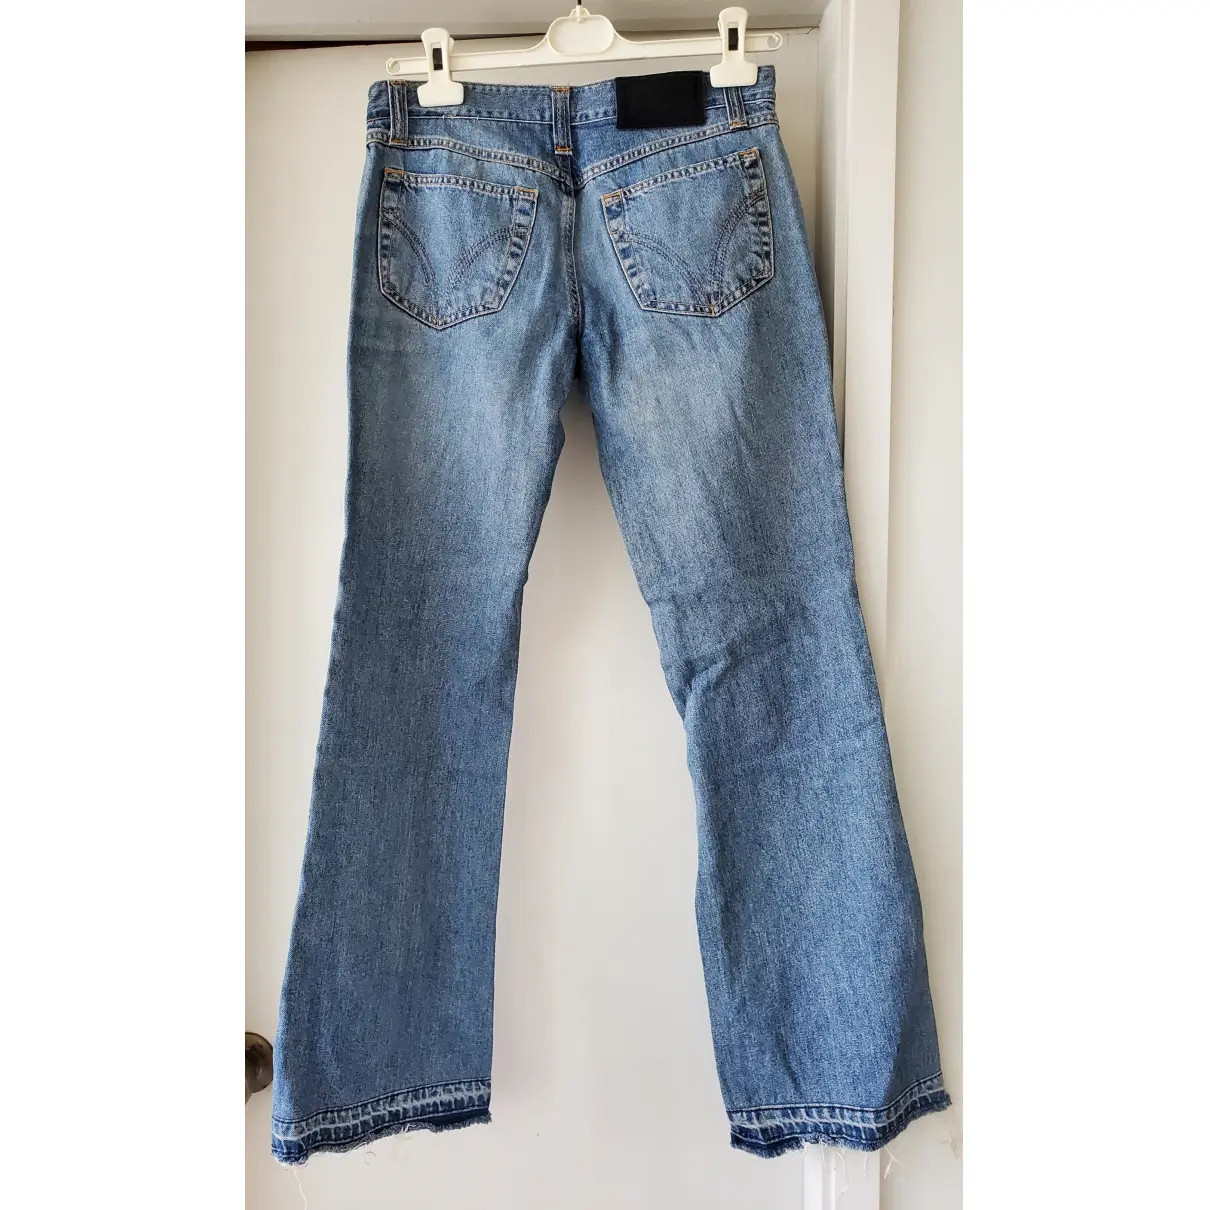 Buy D&G Bootcut jeans online